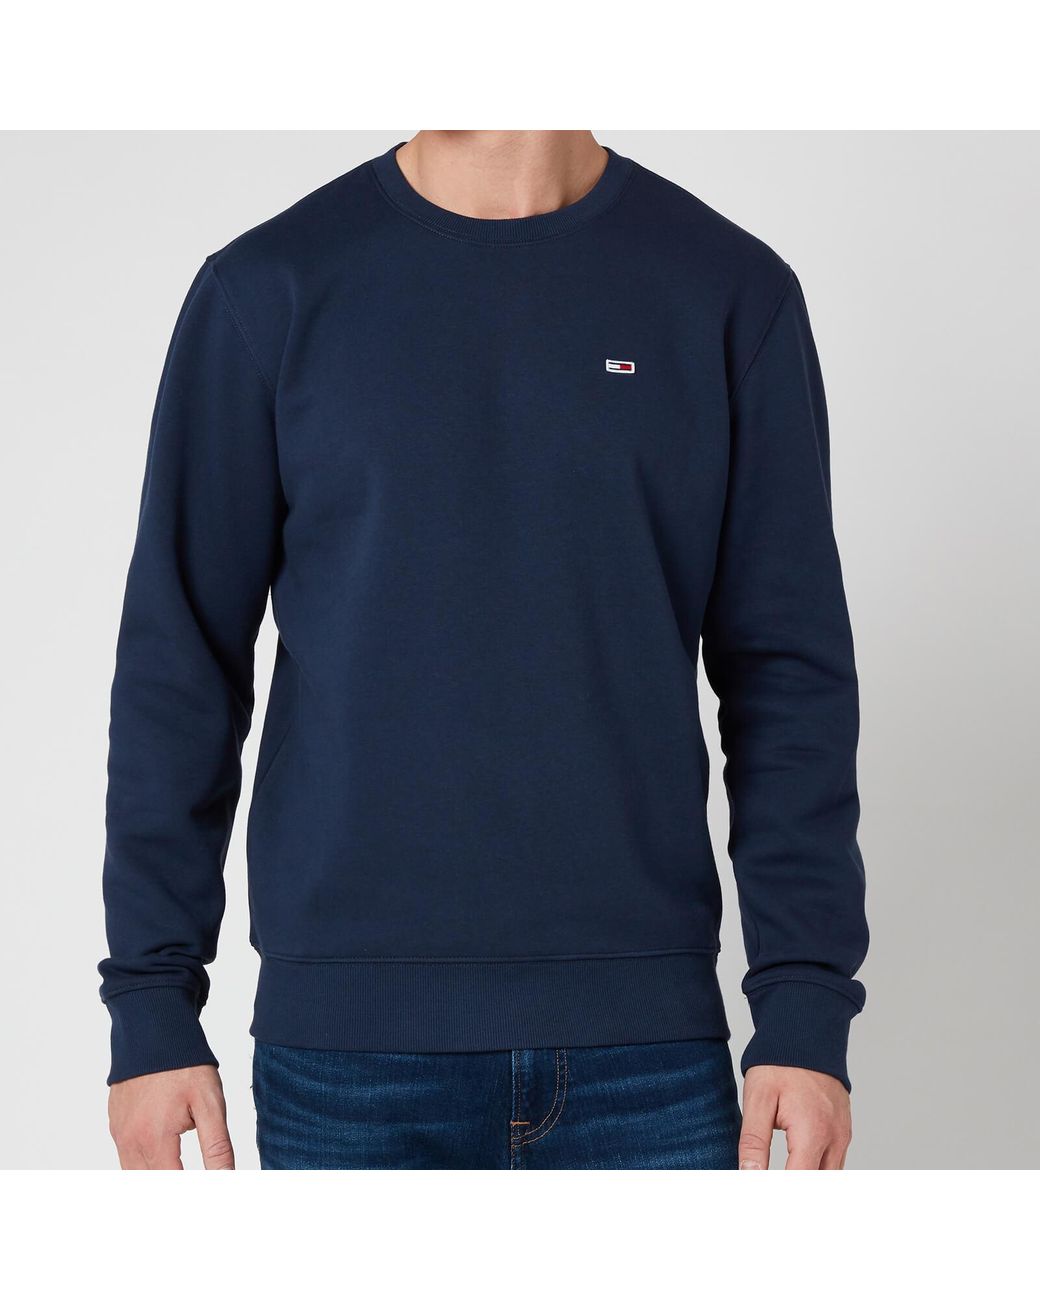 Tommy Hilfiger Regular Fleece Crewneck Sweatshirt in Blue for Men - Lyst